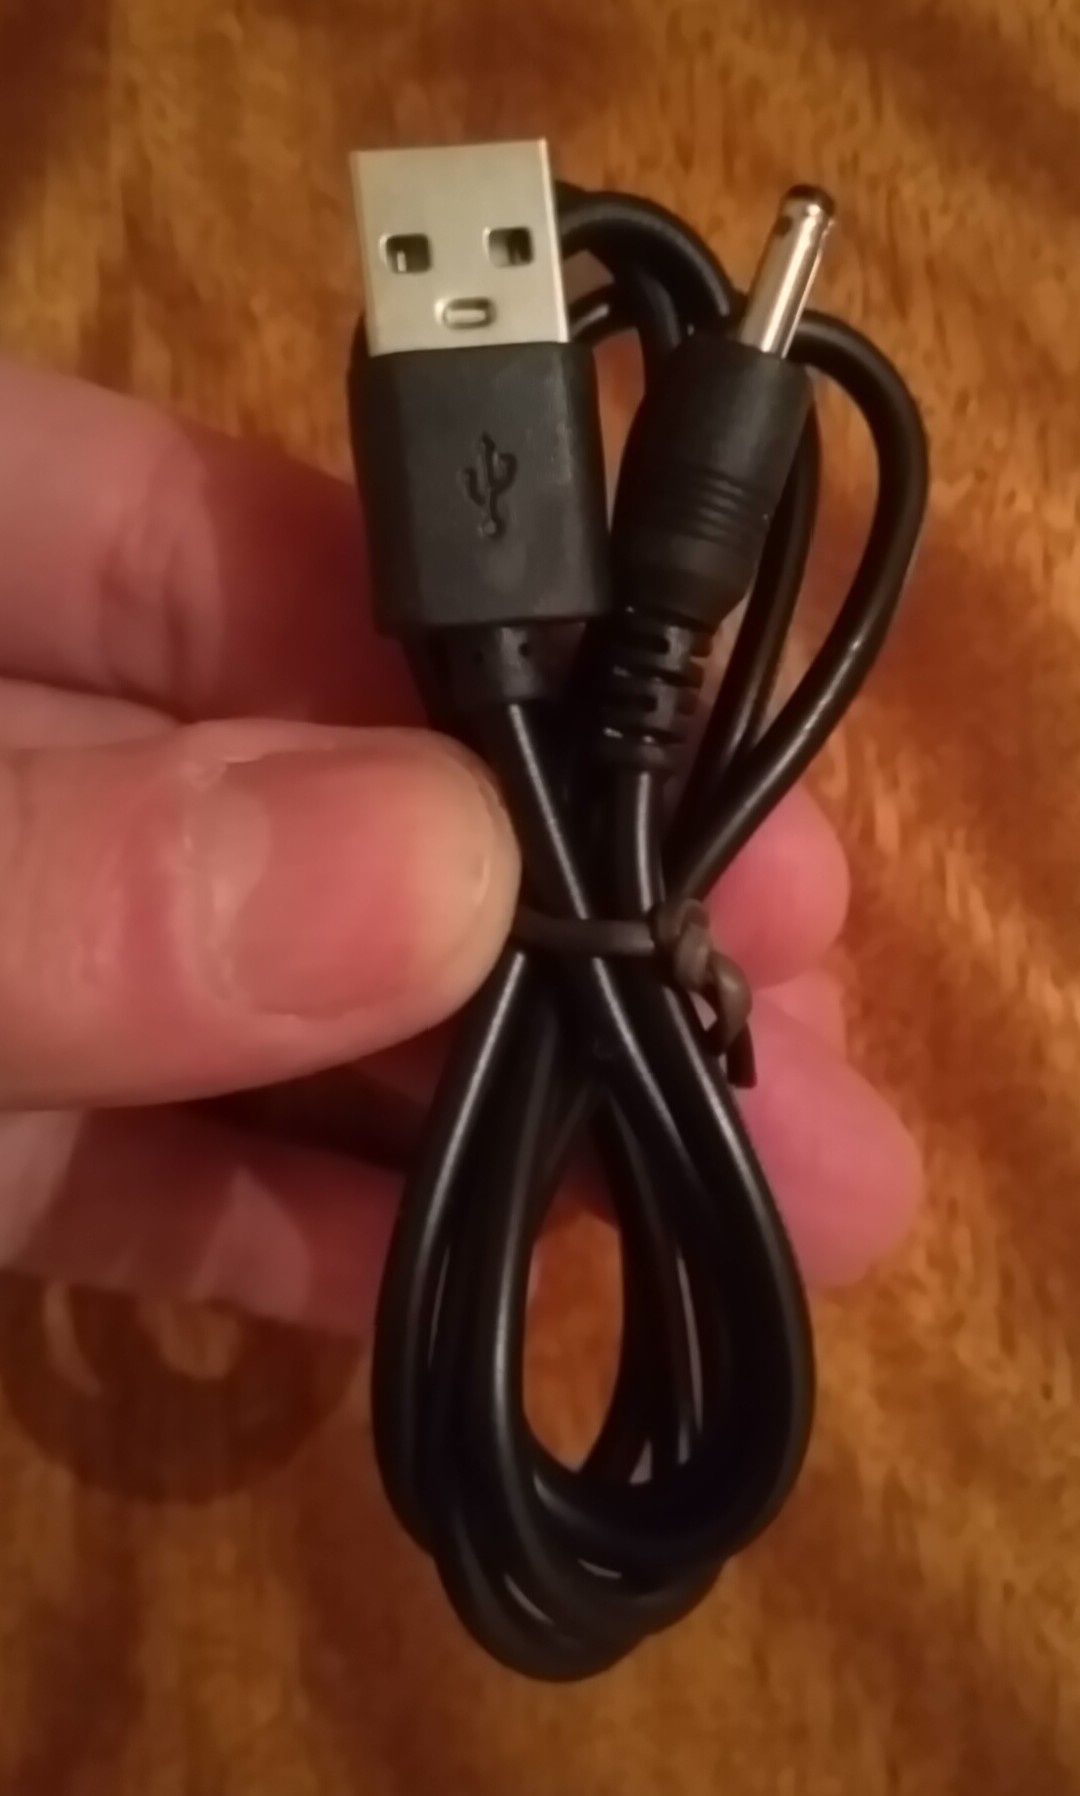 UGREEN MAGNETIC тип MICRO PLUG USB кабель для зарядного устройства